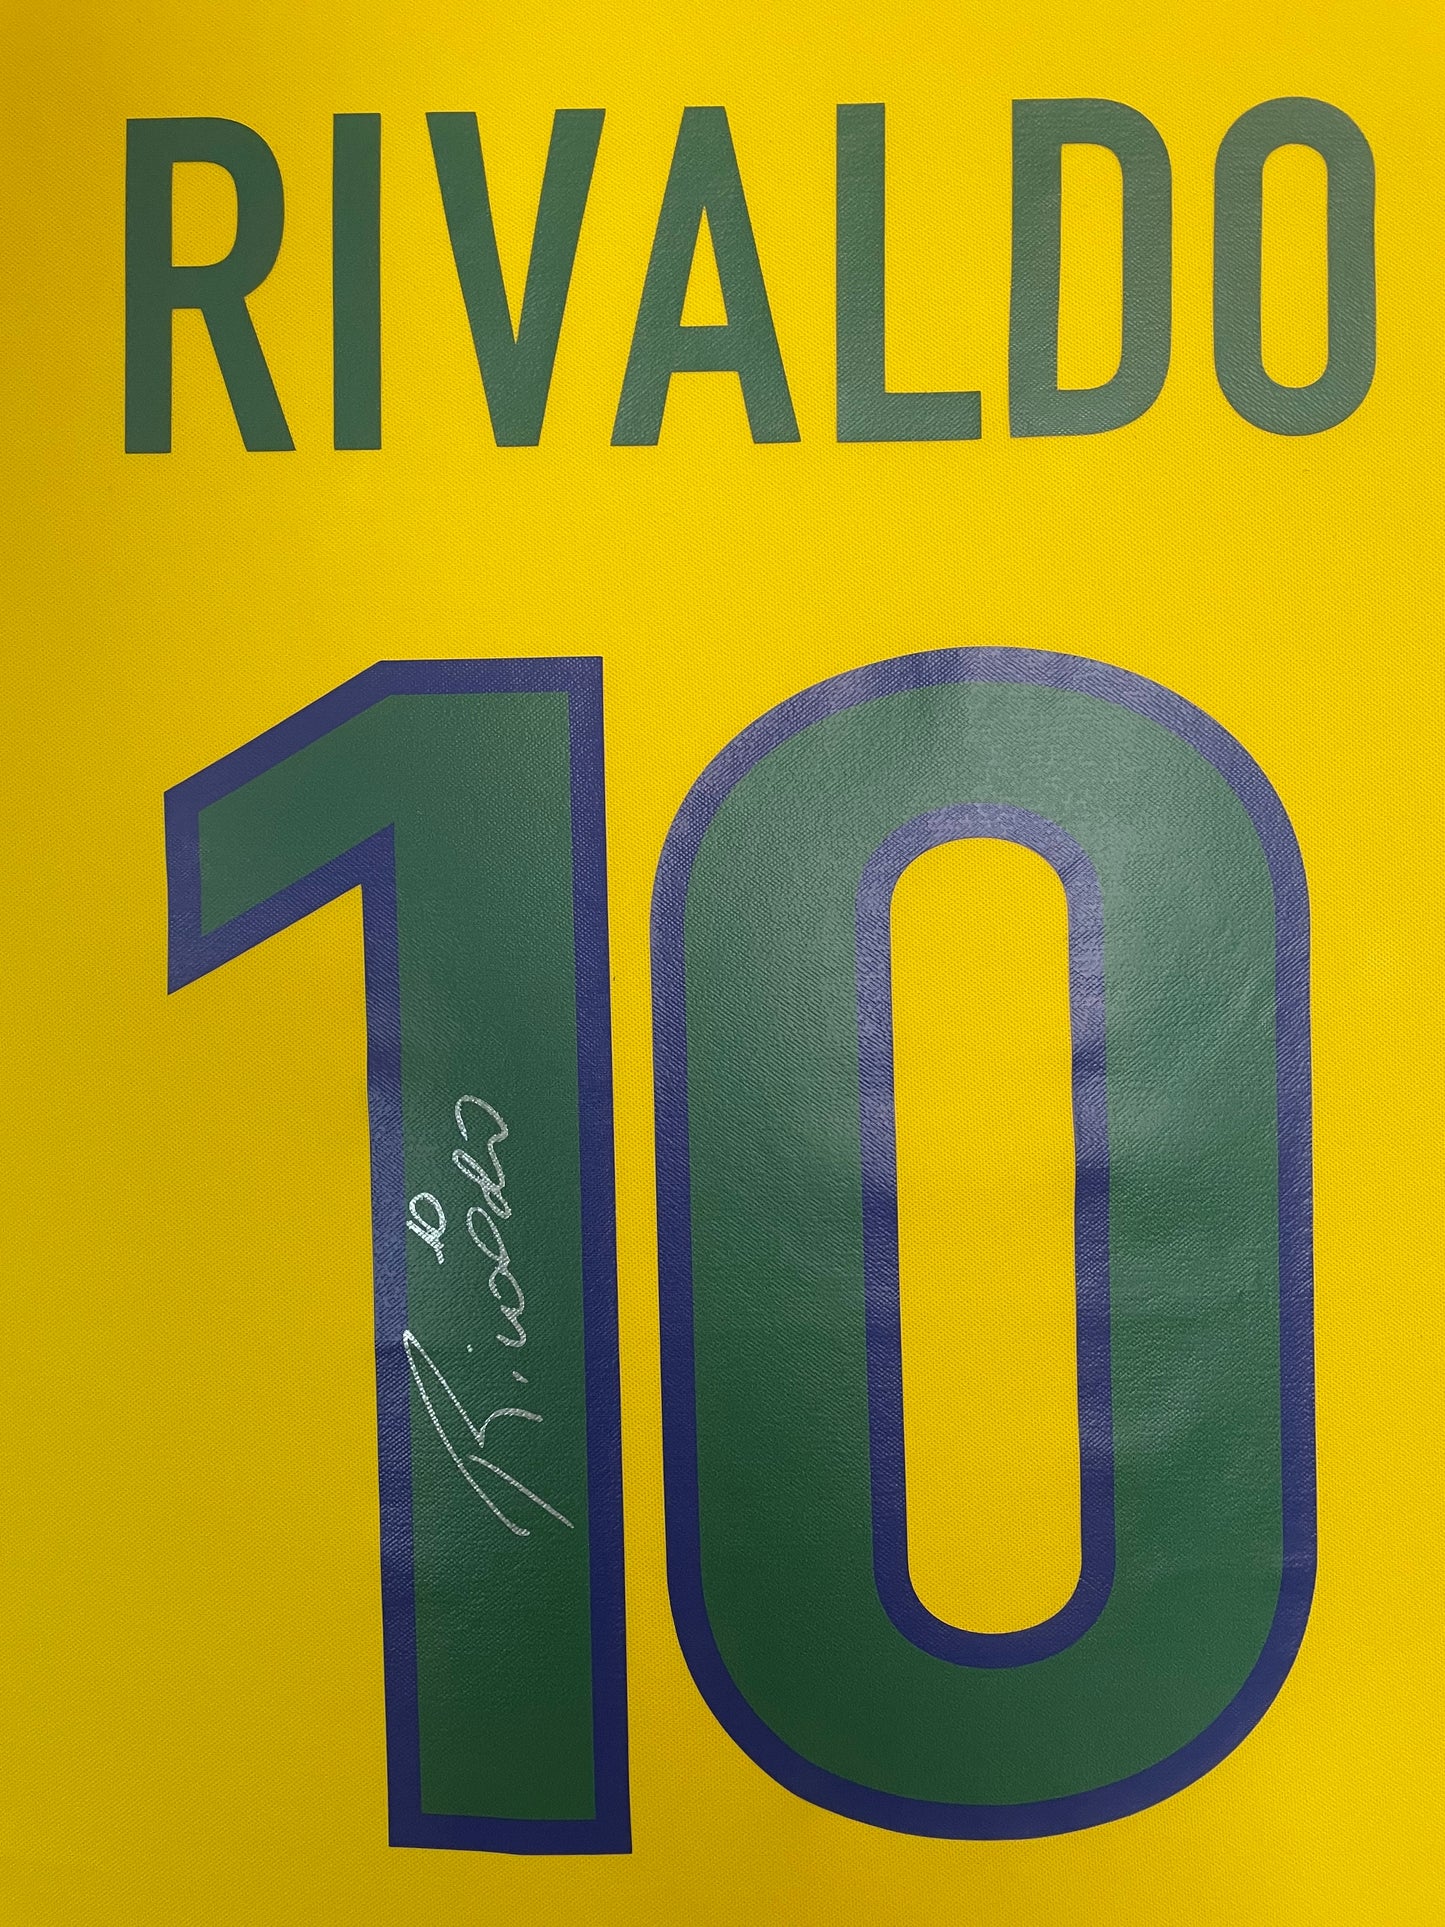 Rivaldo Brazil 1998 Signed Framed World Cup Home Shirt with COA